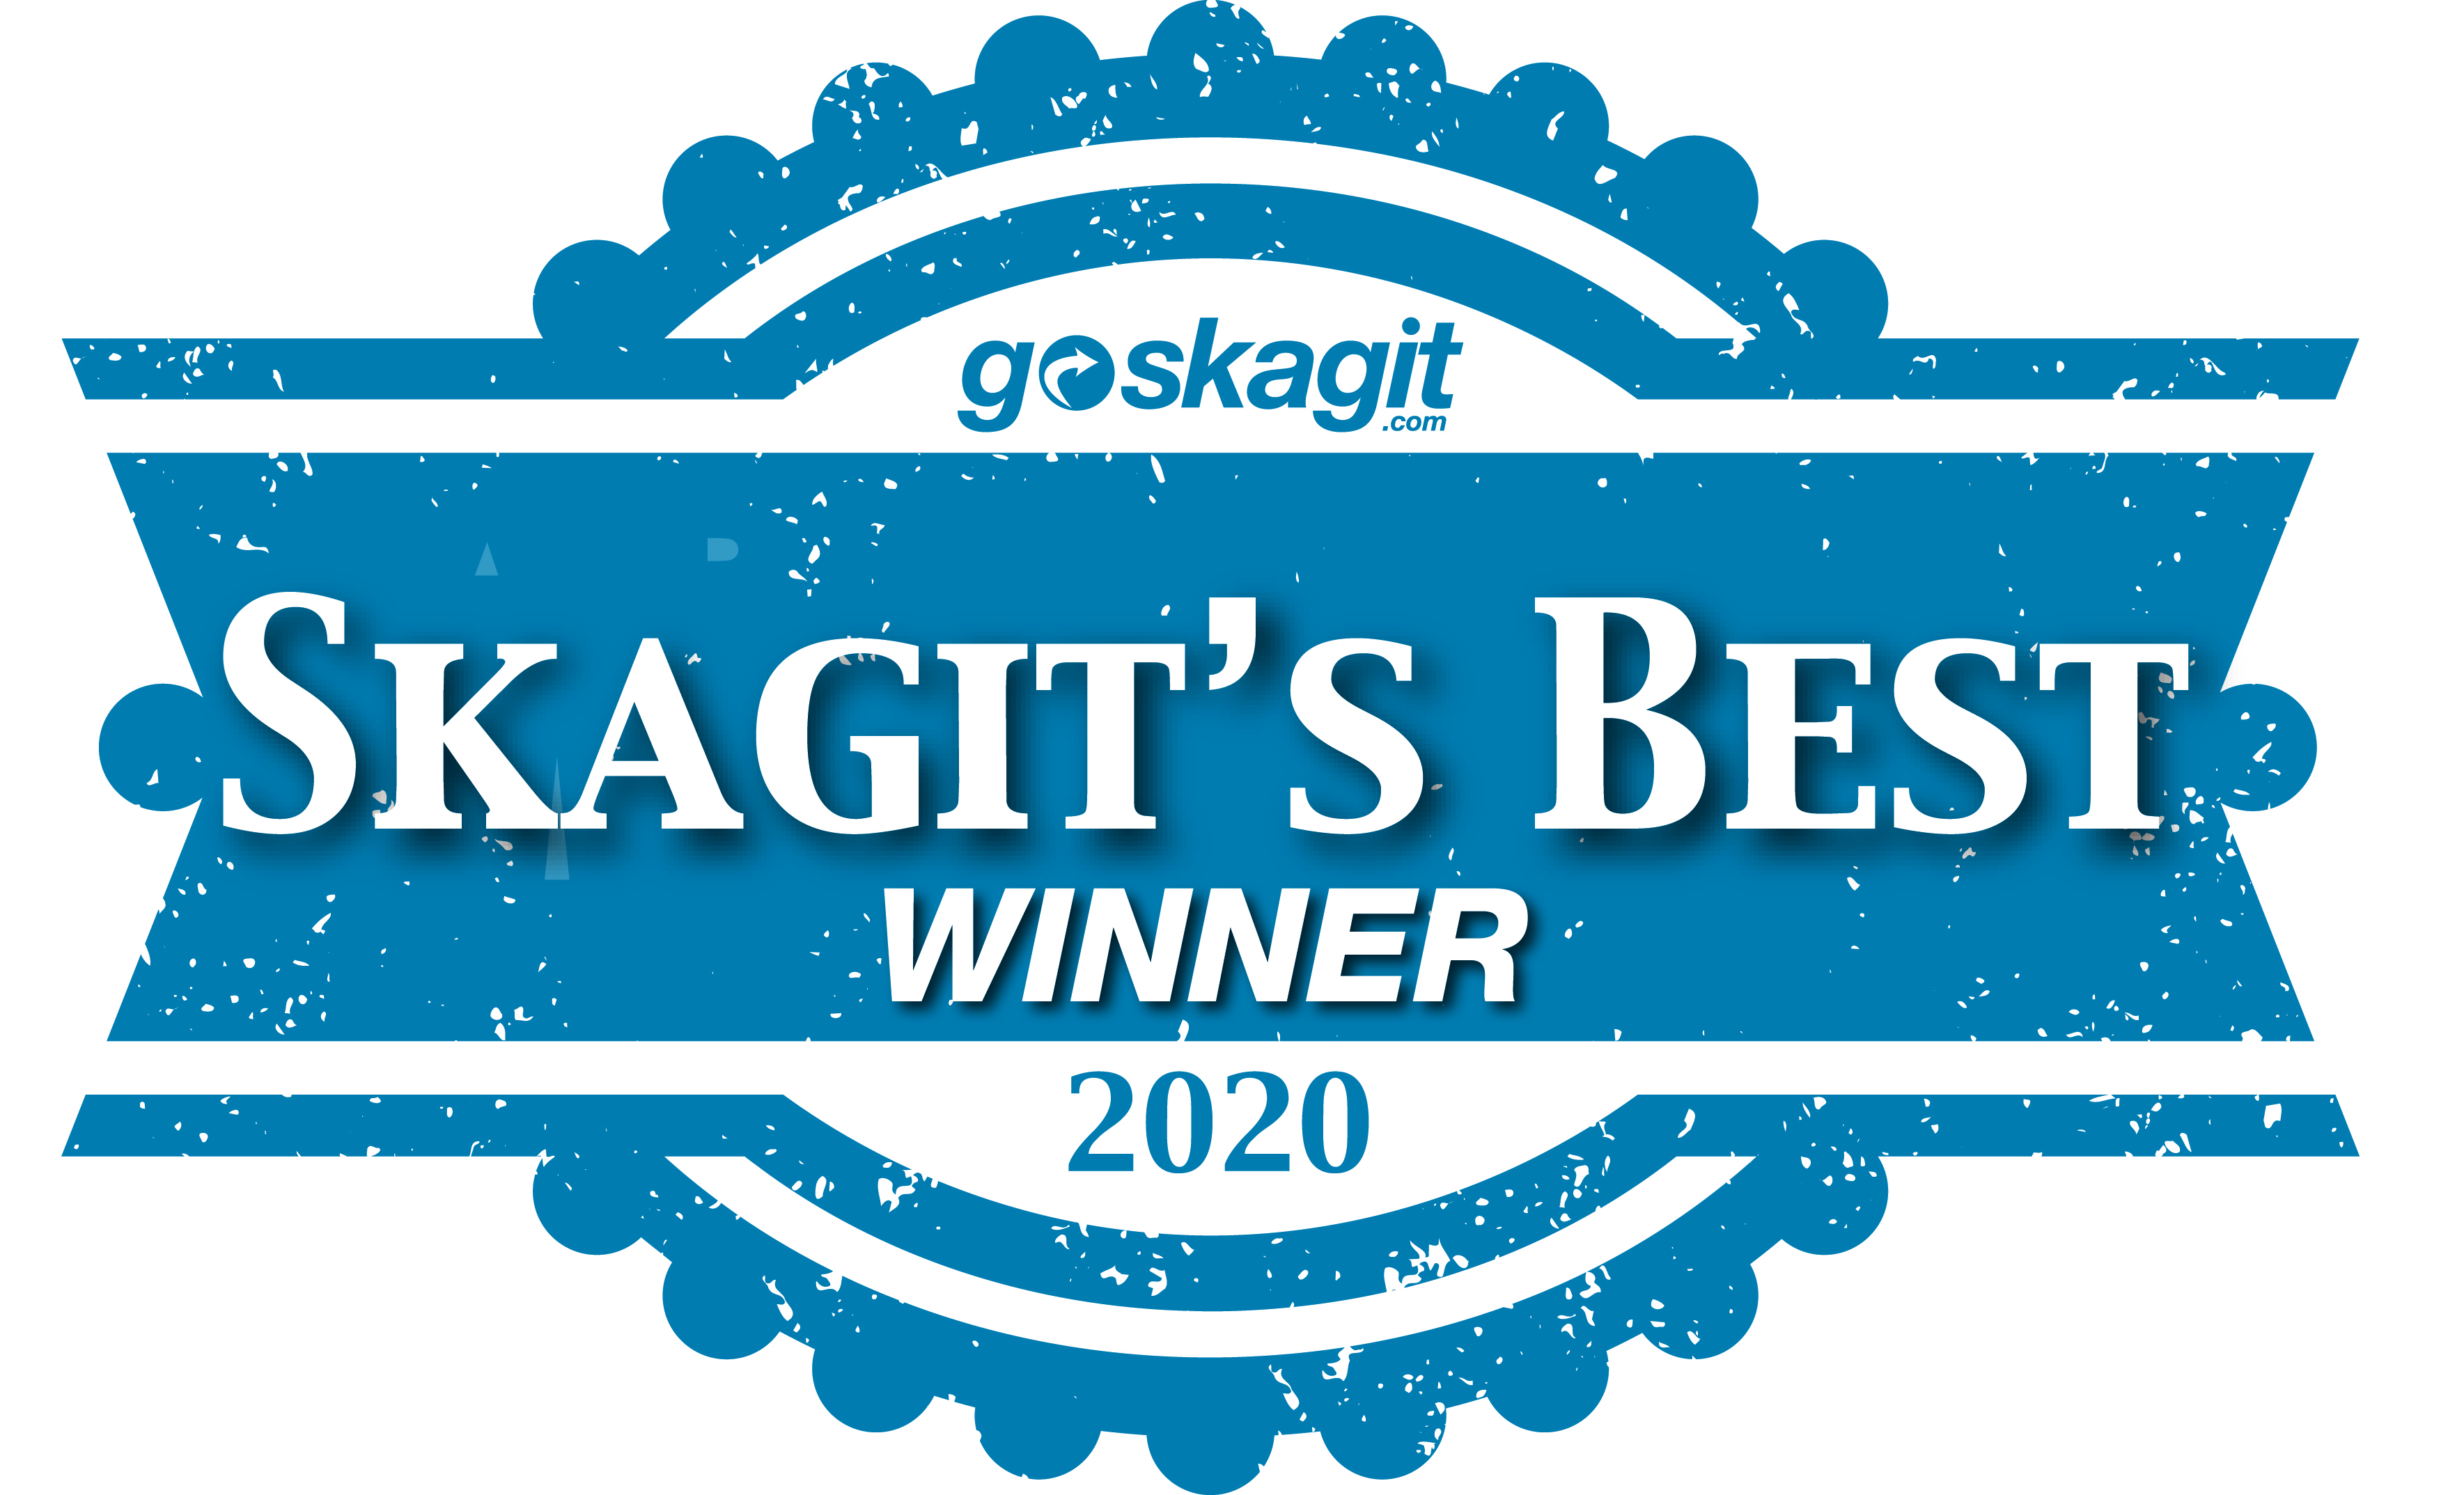 SkagitsBest Winner 2020